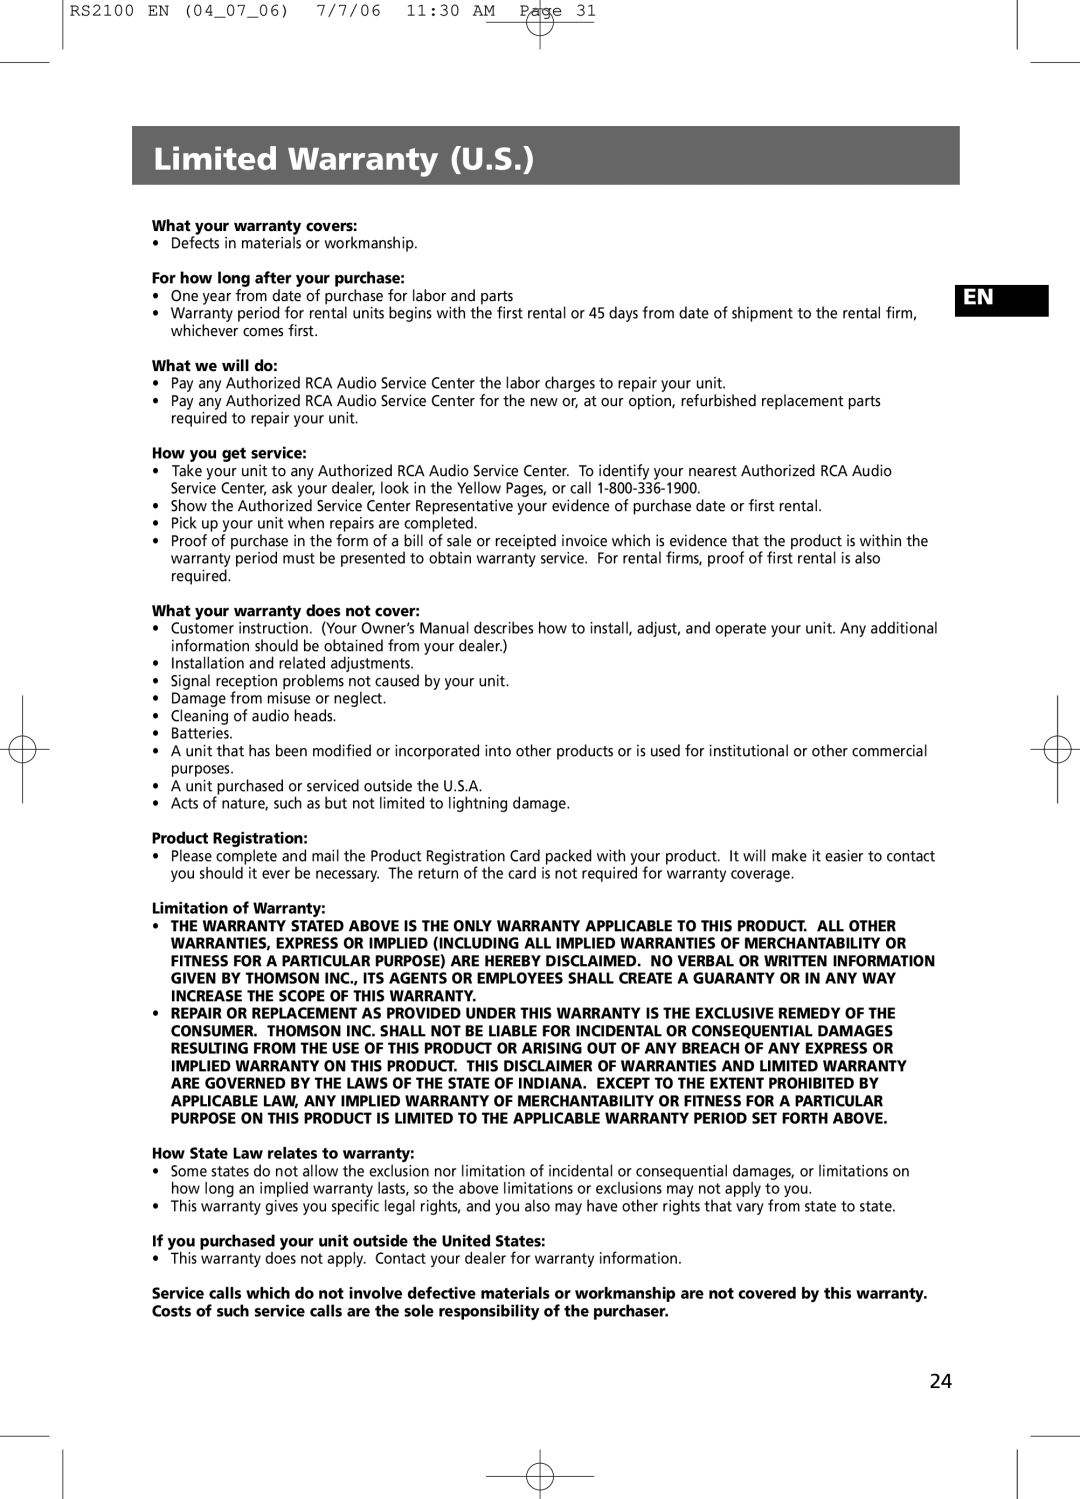 RCA user manual Limited Warranty U.S, RS2100 EN 04 07 06 7/7/06 11 30 AM Page 